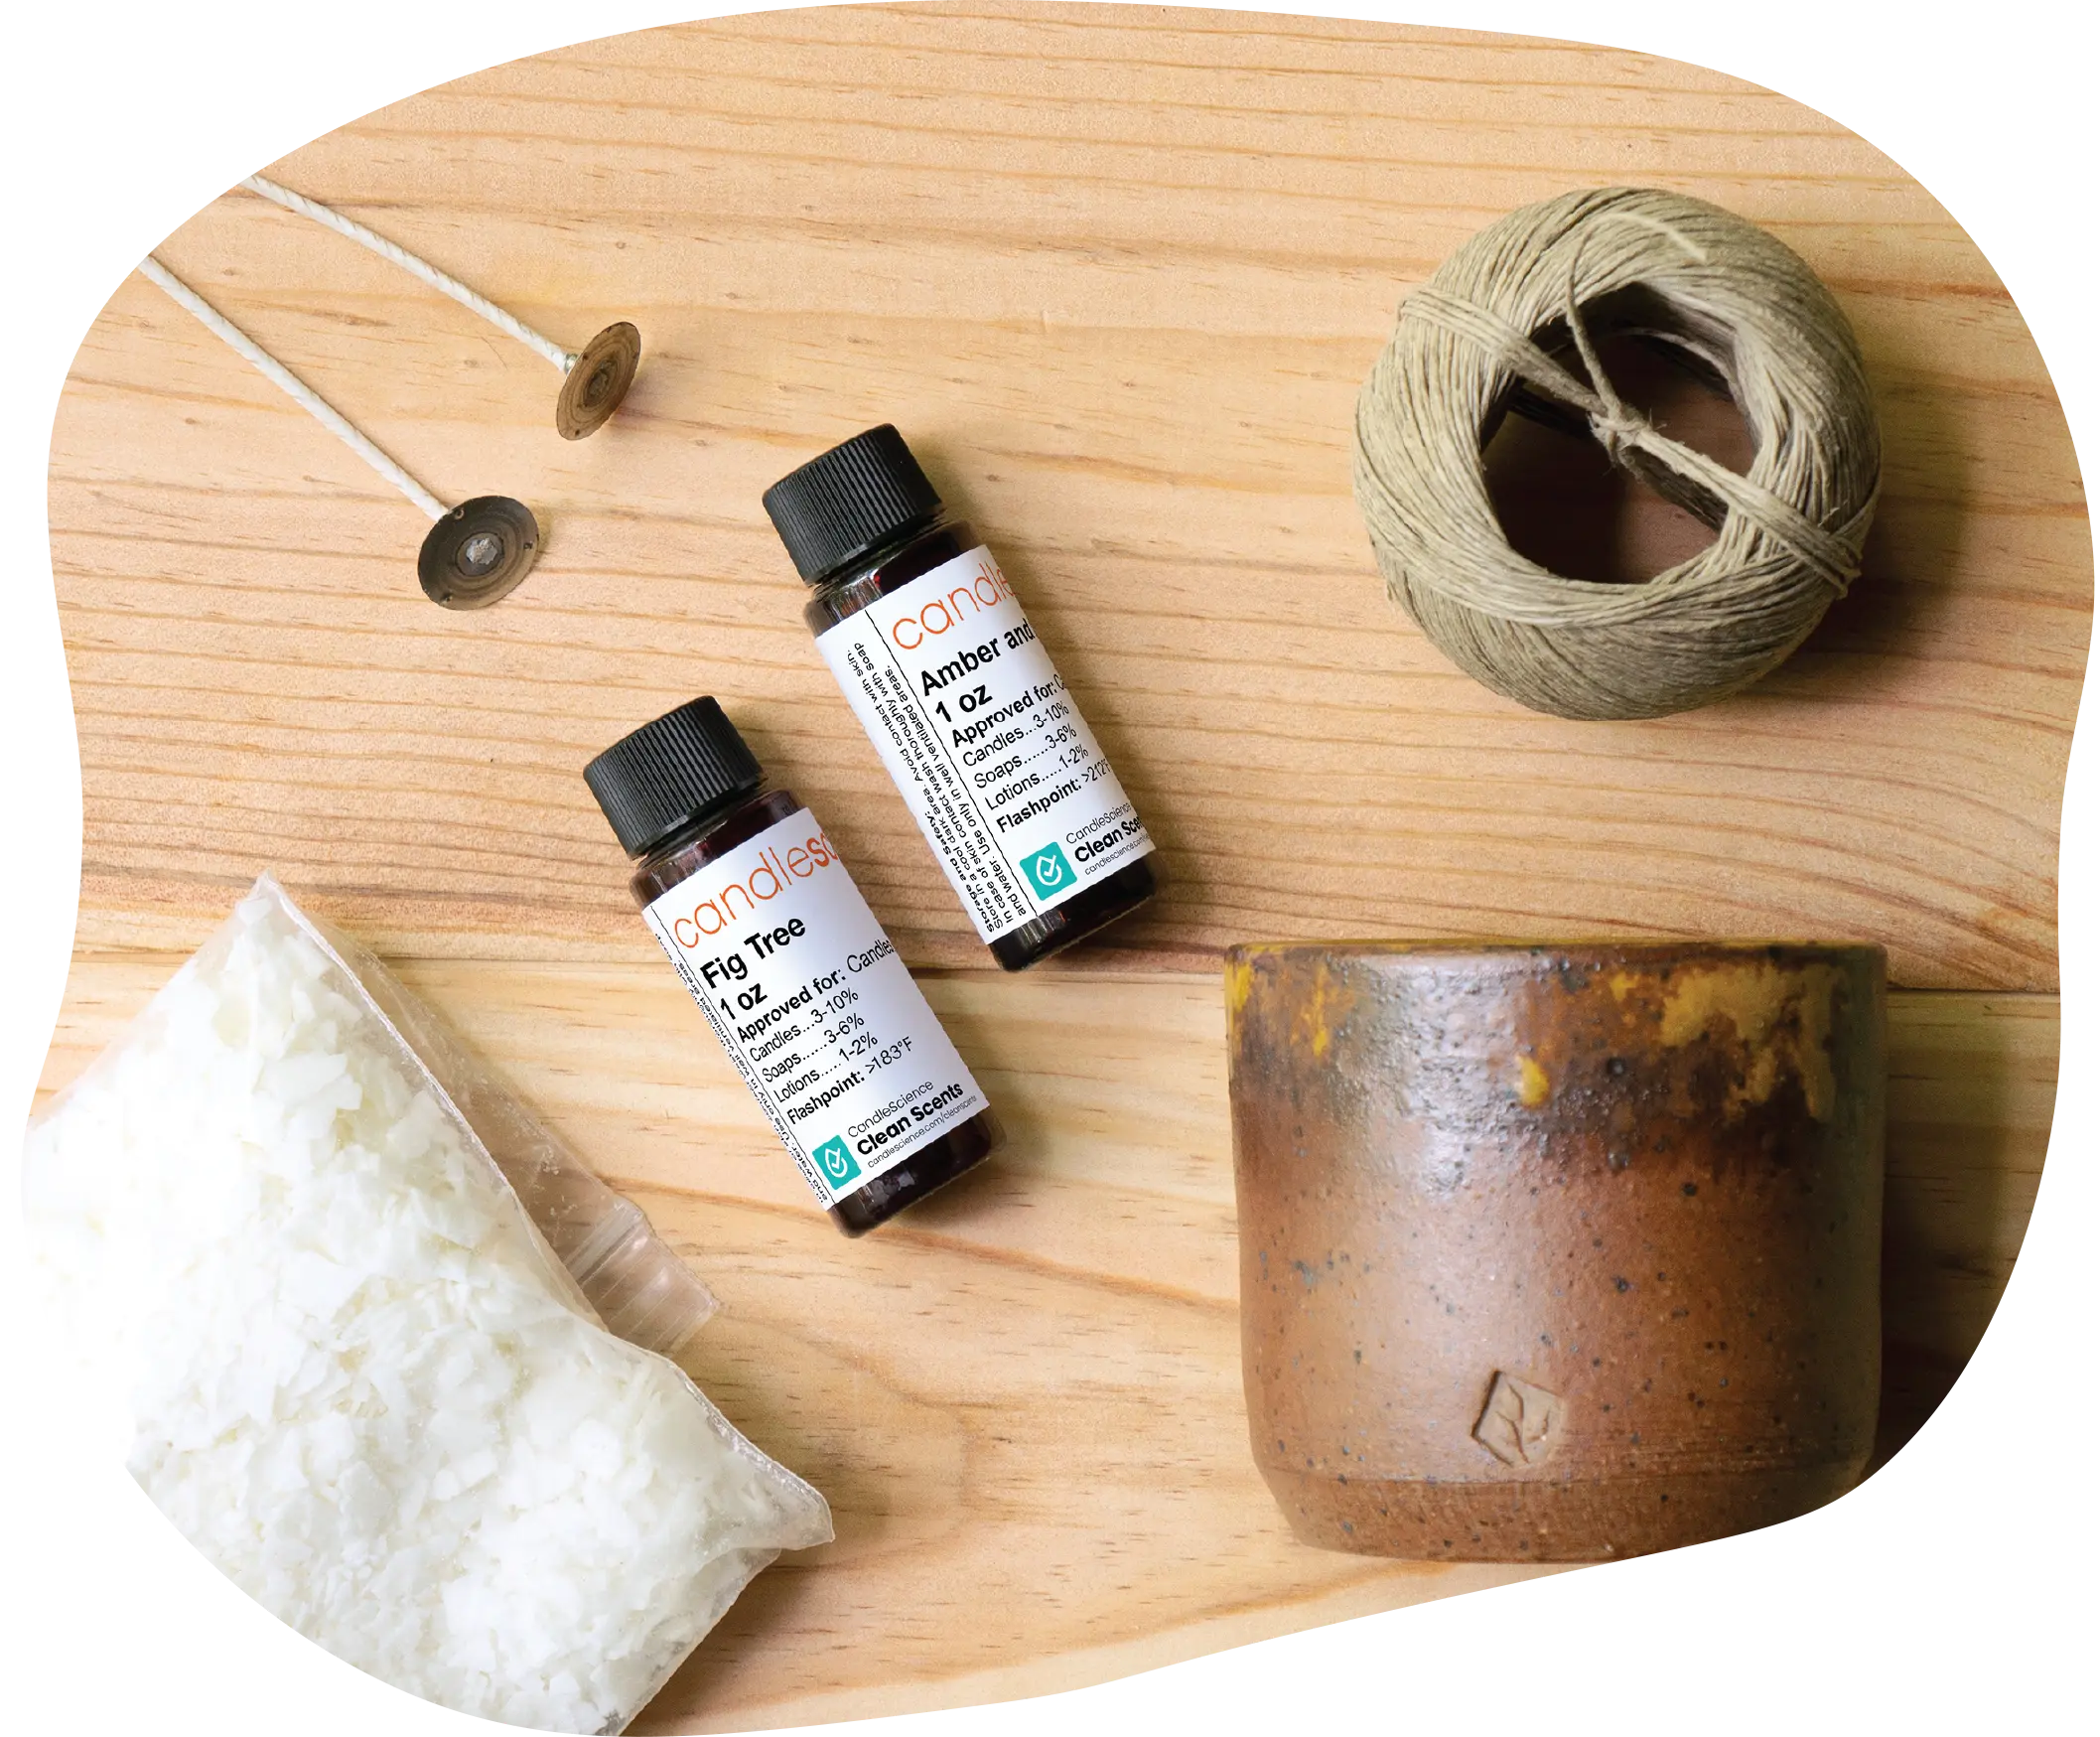 https://handmadeseller.com/wp-content/uploads/2020/09/safe-fragrance-for-soap-and-candle-makers-1-1.webp